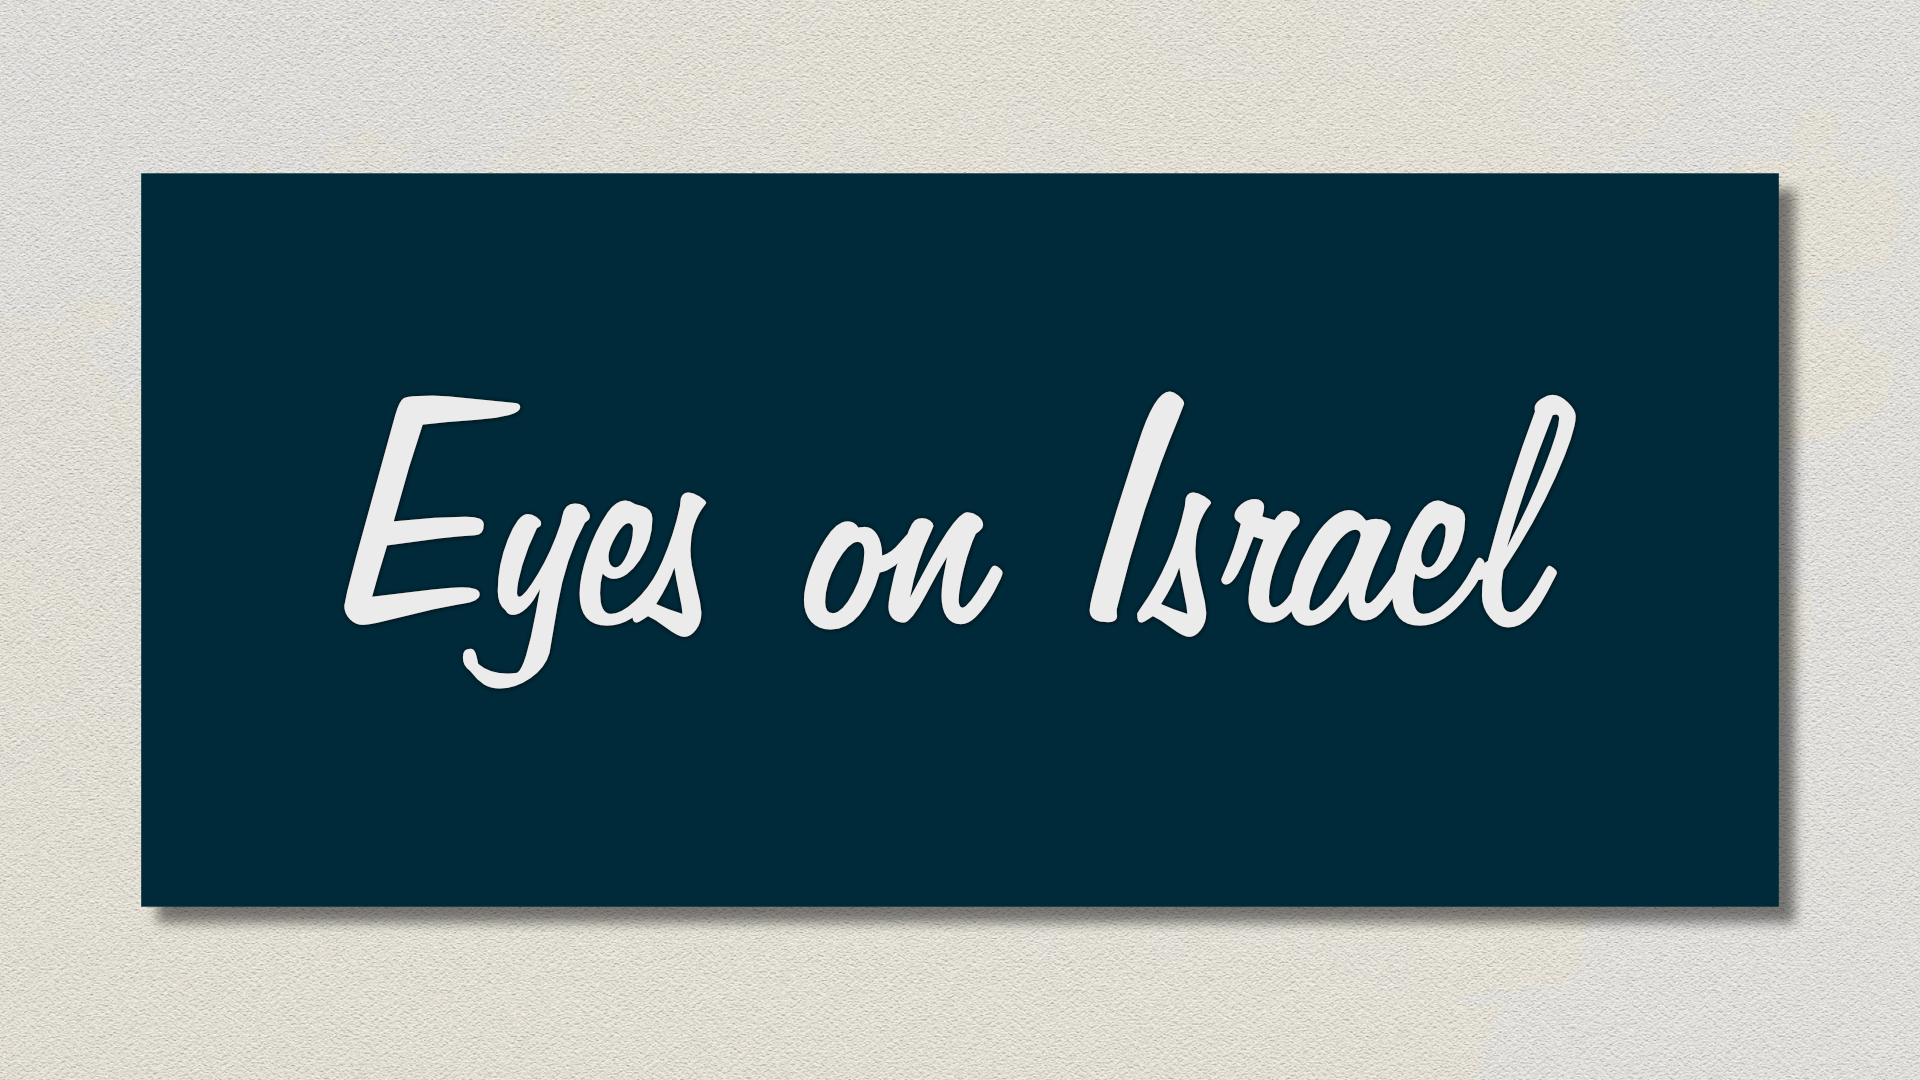 01 - Eyes on Israel